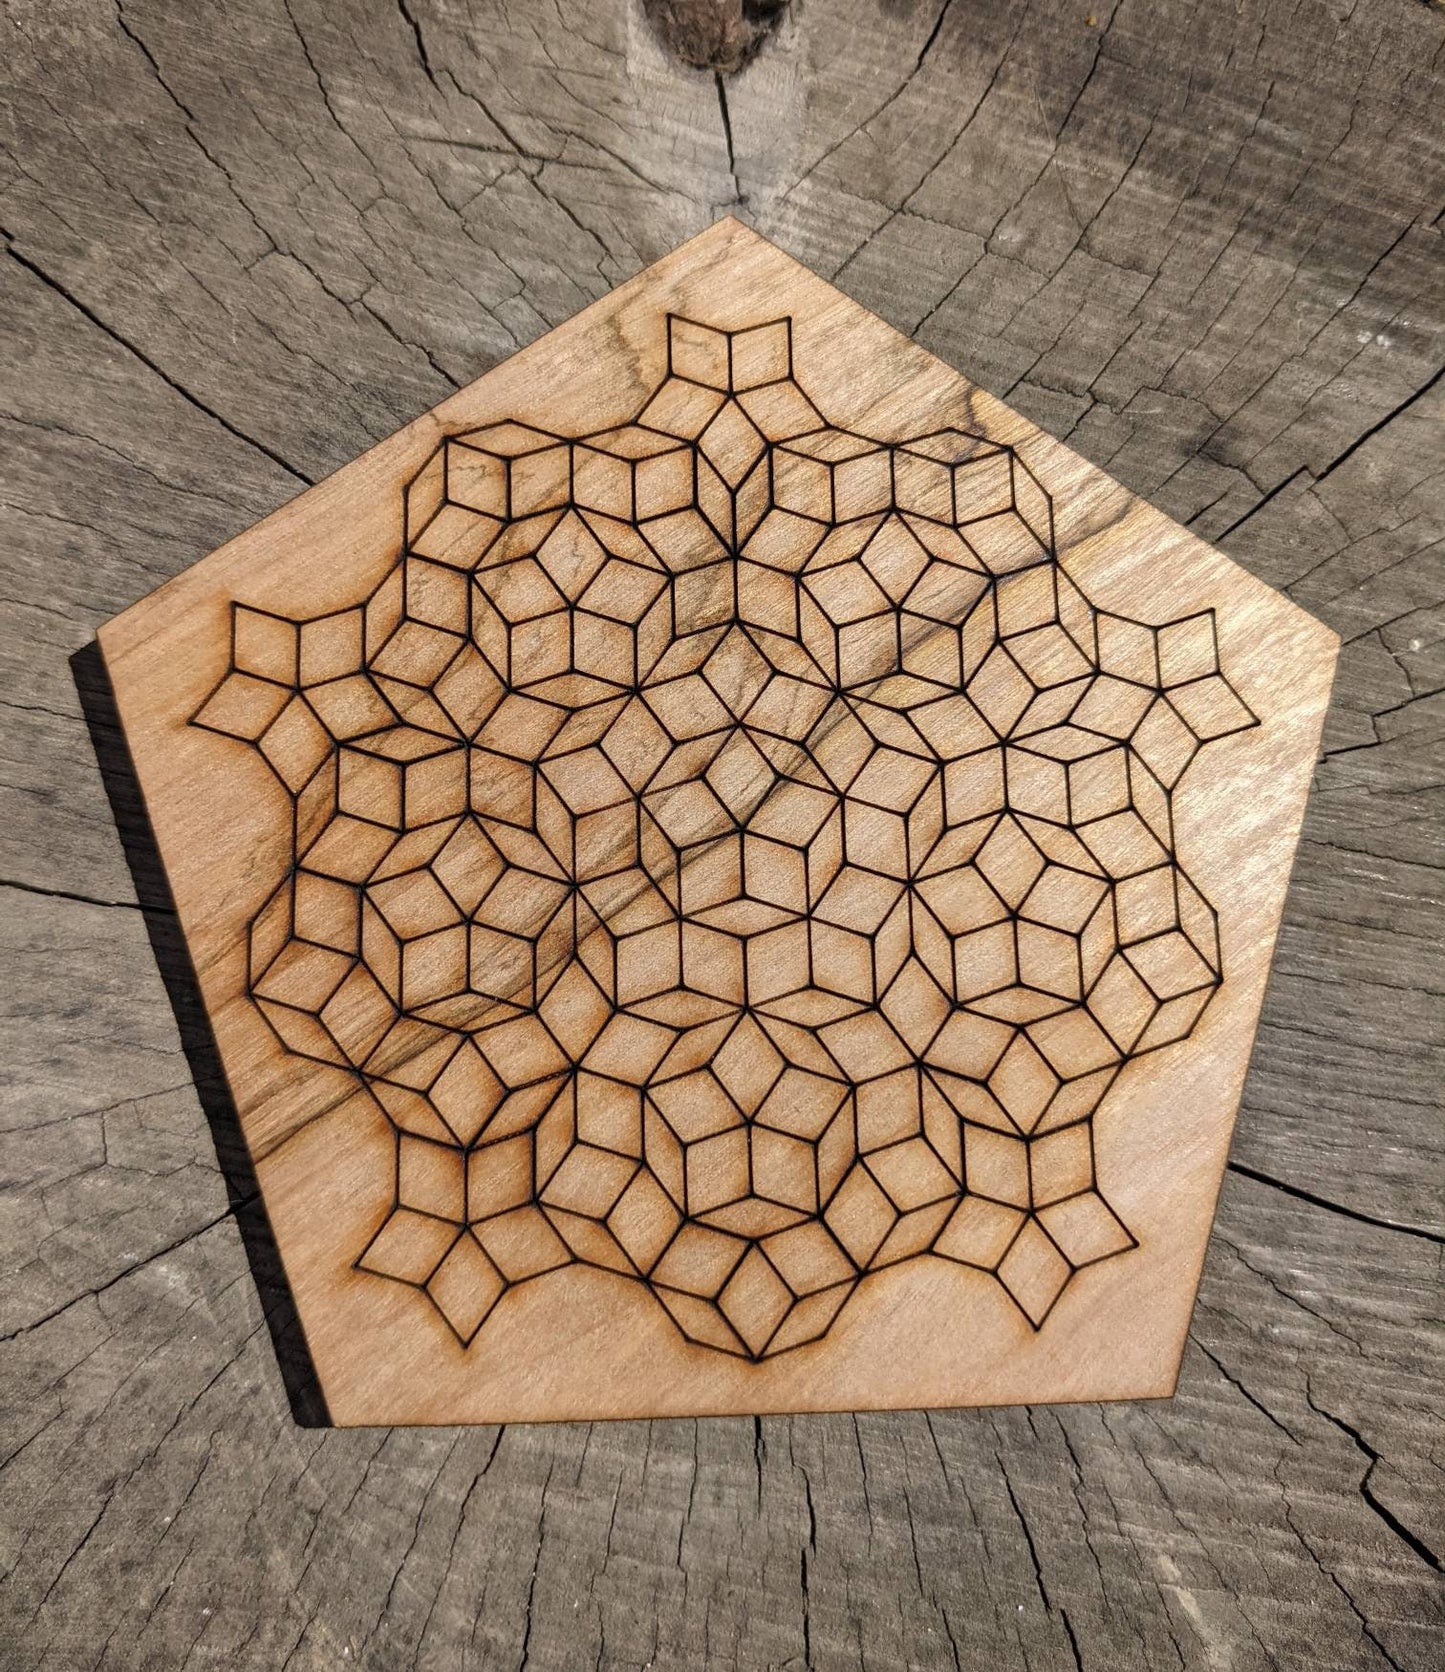 Pentagonal Penrose Tile Set Reclaimed Wood Laser Engraved and Cut Wall Art or Crystal Grid